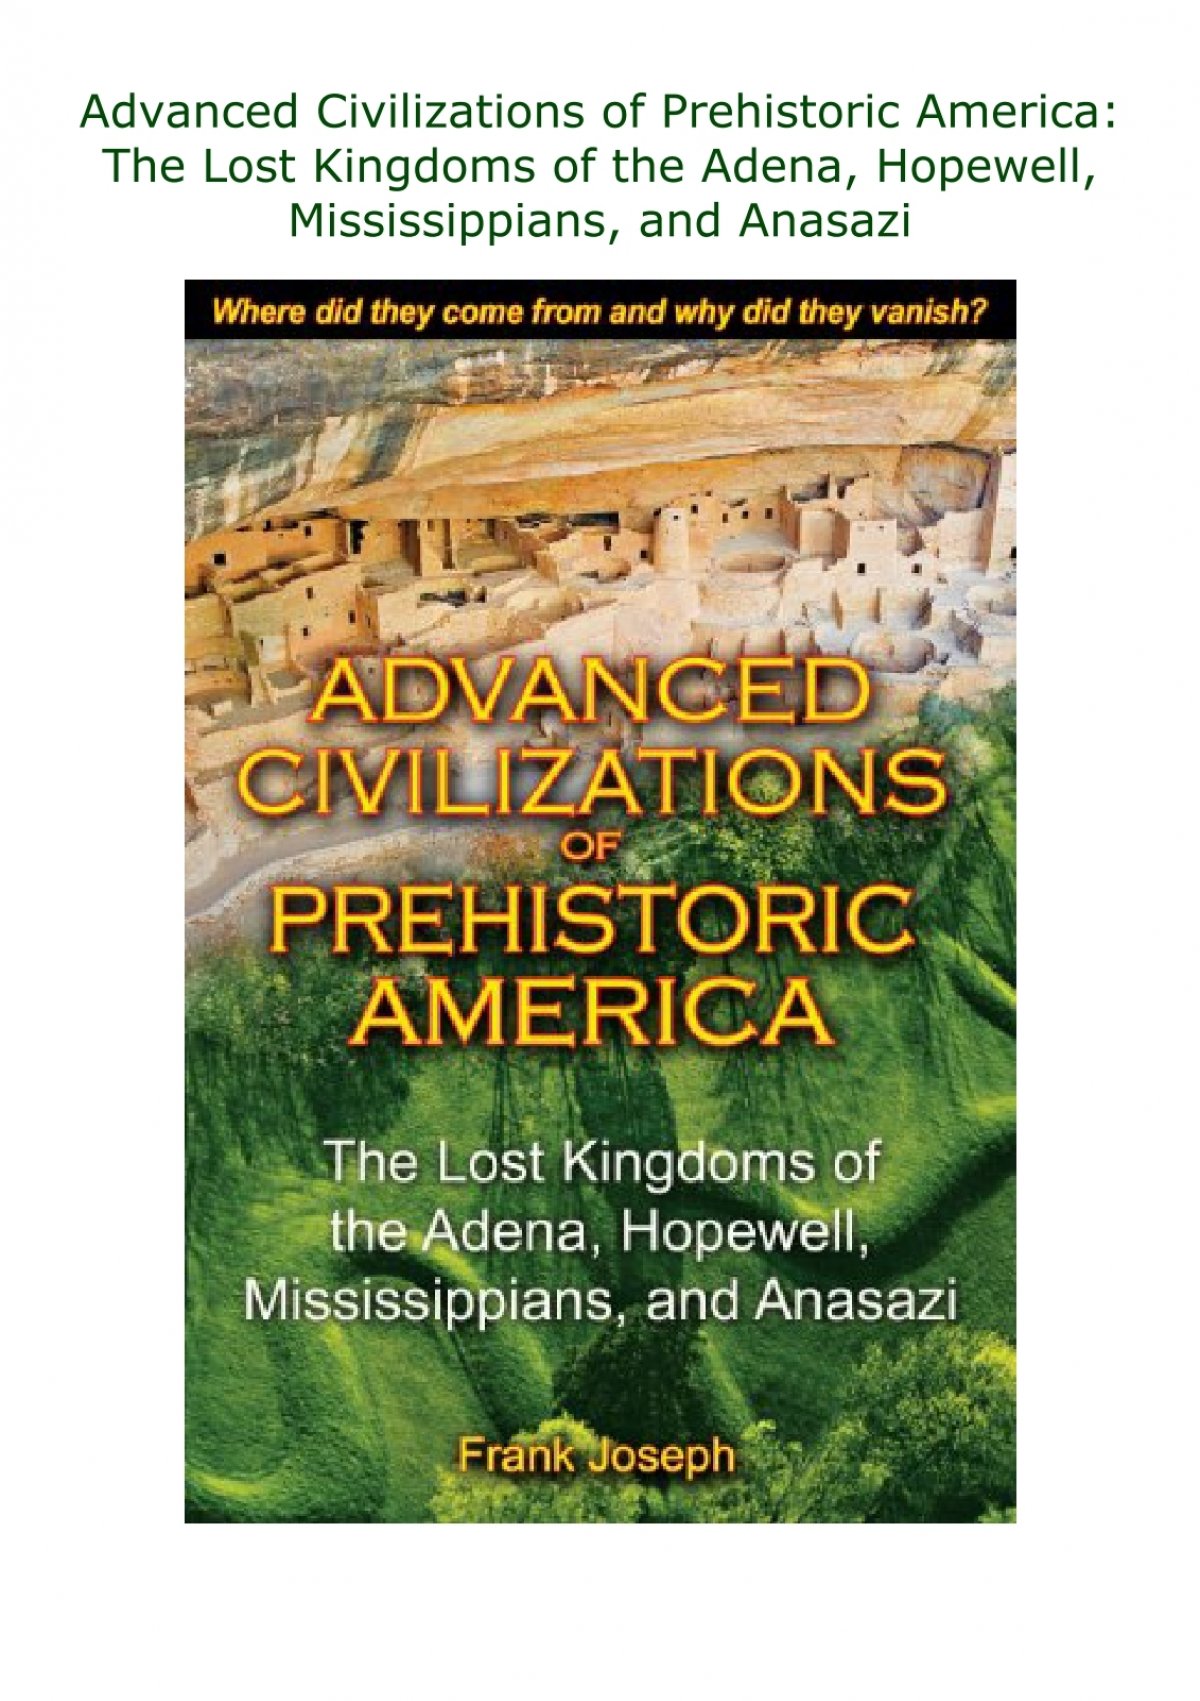 [pdf] ️download⚡️ Advanced Civilizations Of Prehistoric America The Lost Kingdoms Of The Adena